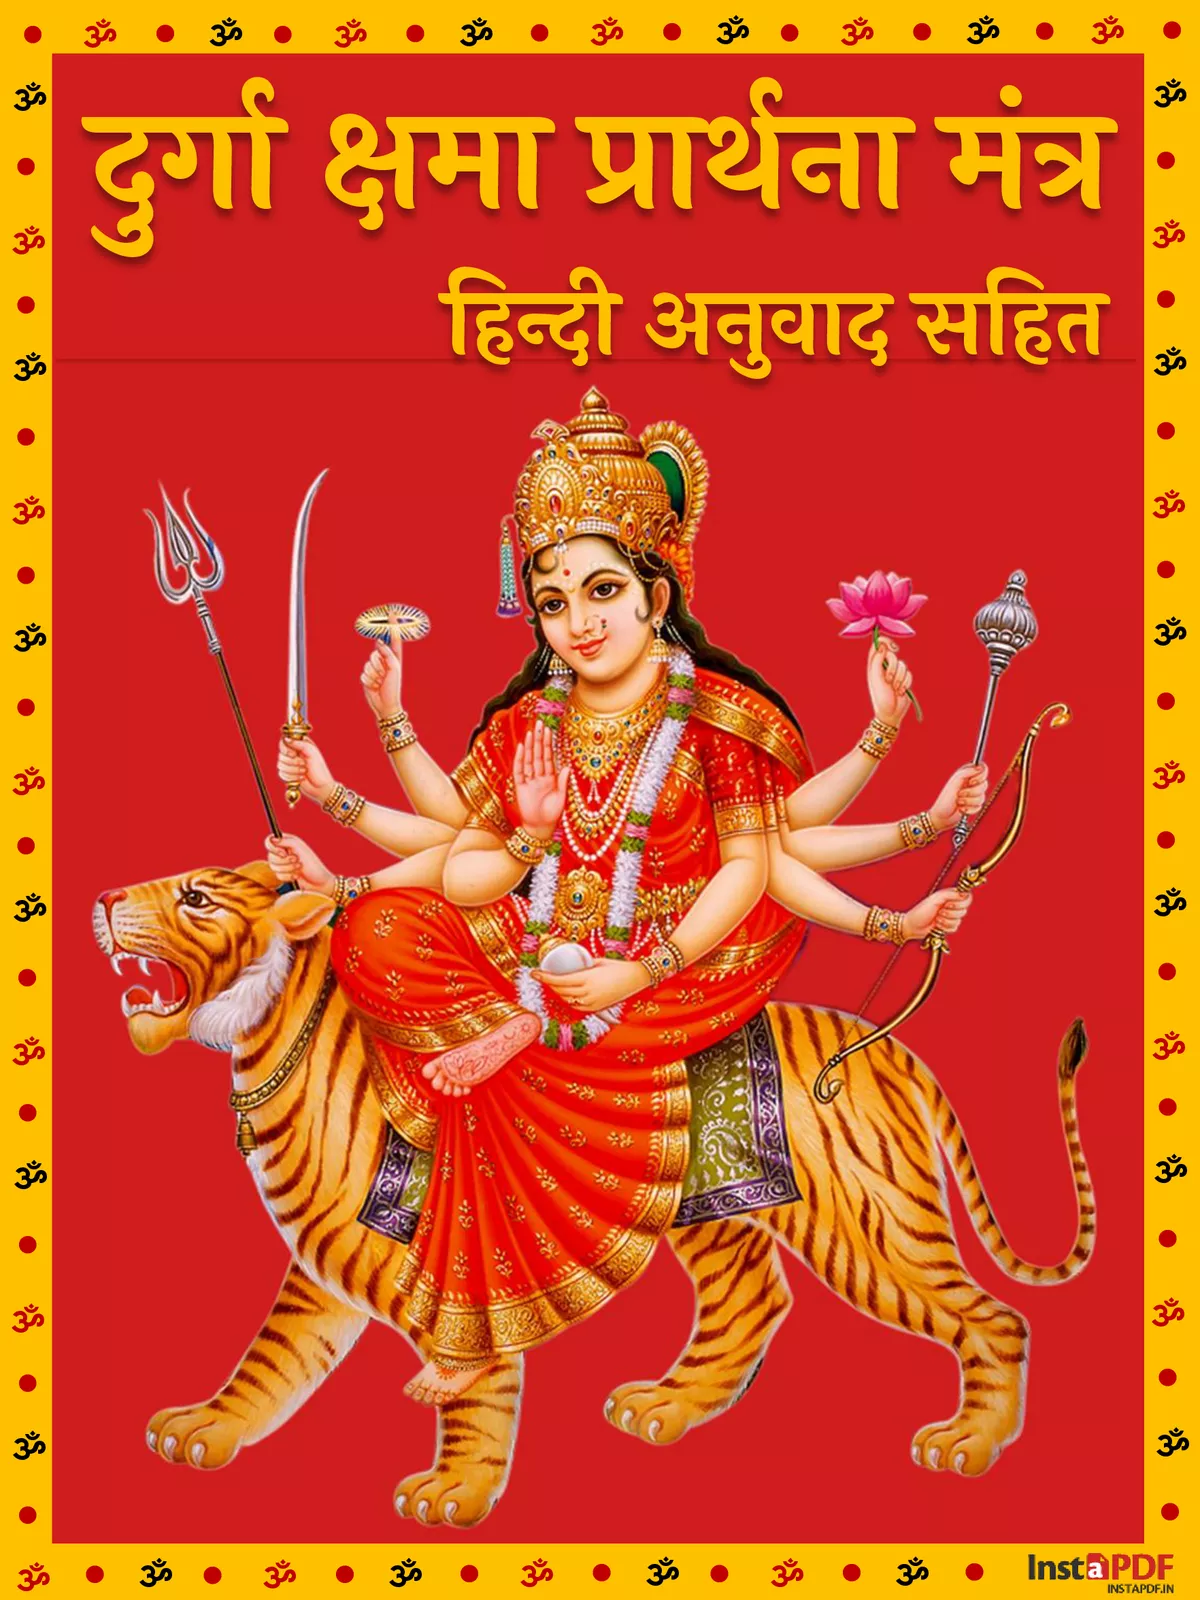 दुर्गा क्षमा प्रार्थना मंत्र – Durga Kshama Prarthana Mantra